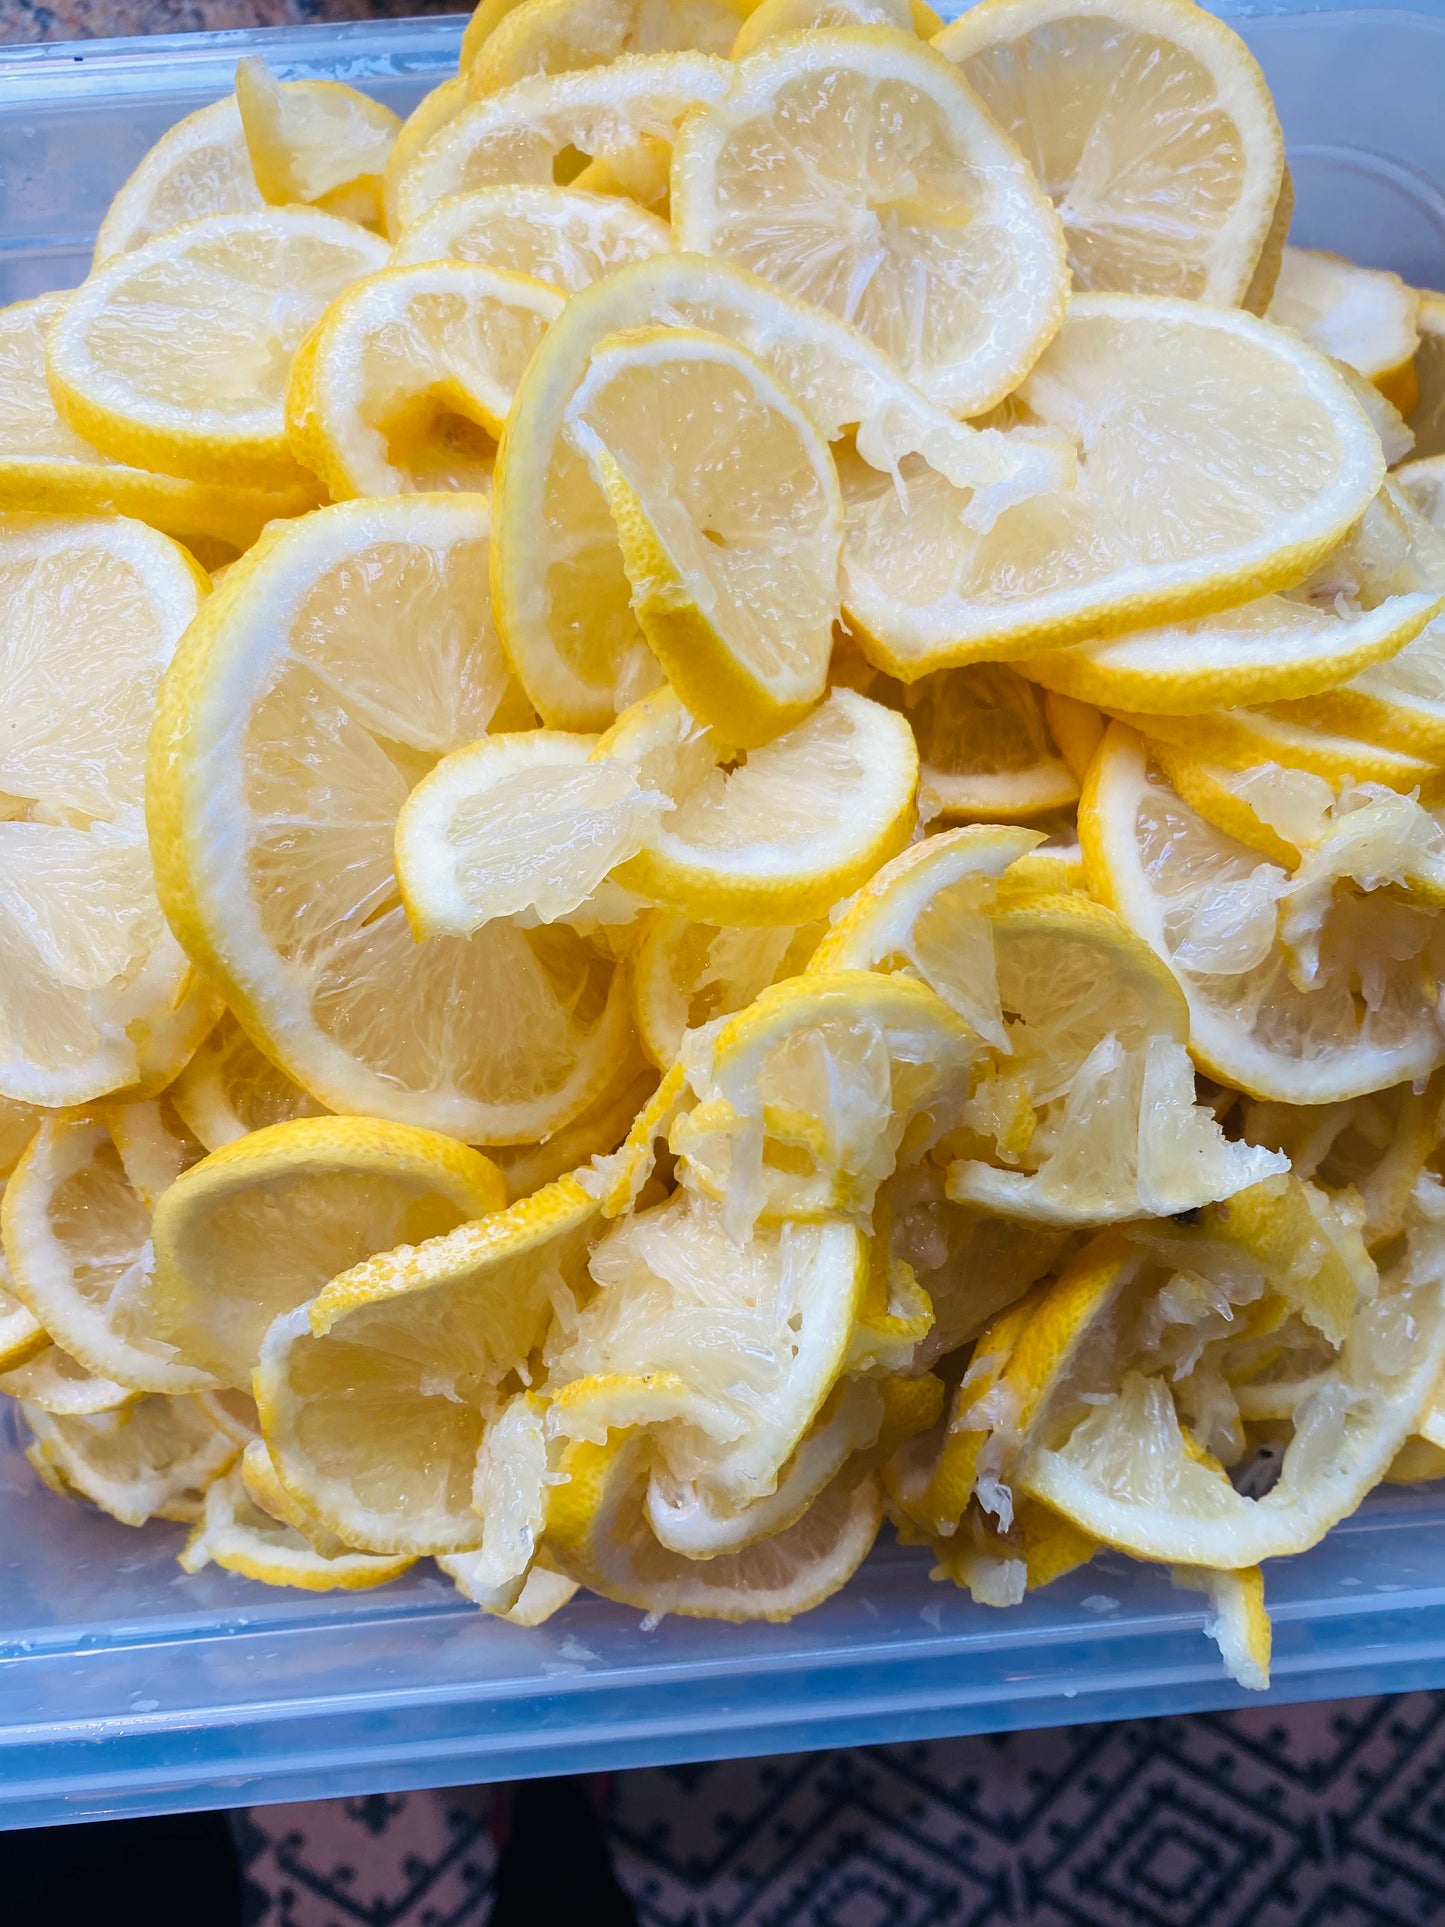 Addy's Meyer Lemon Marmalade - limited batched